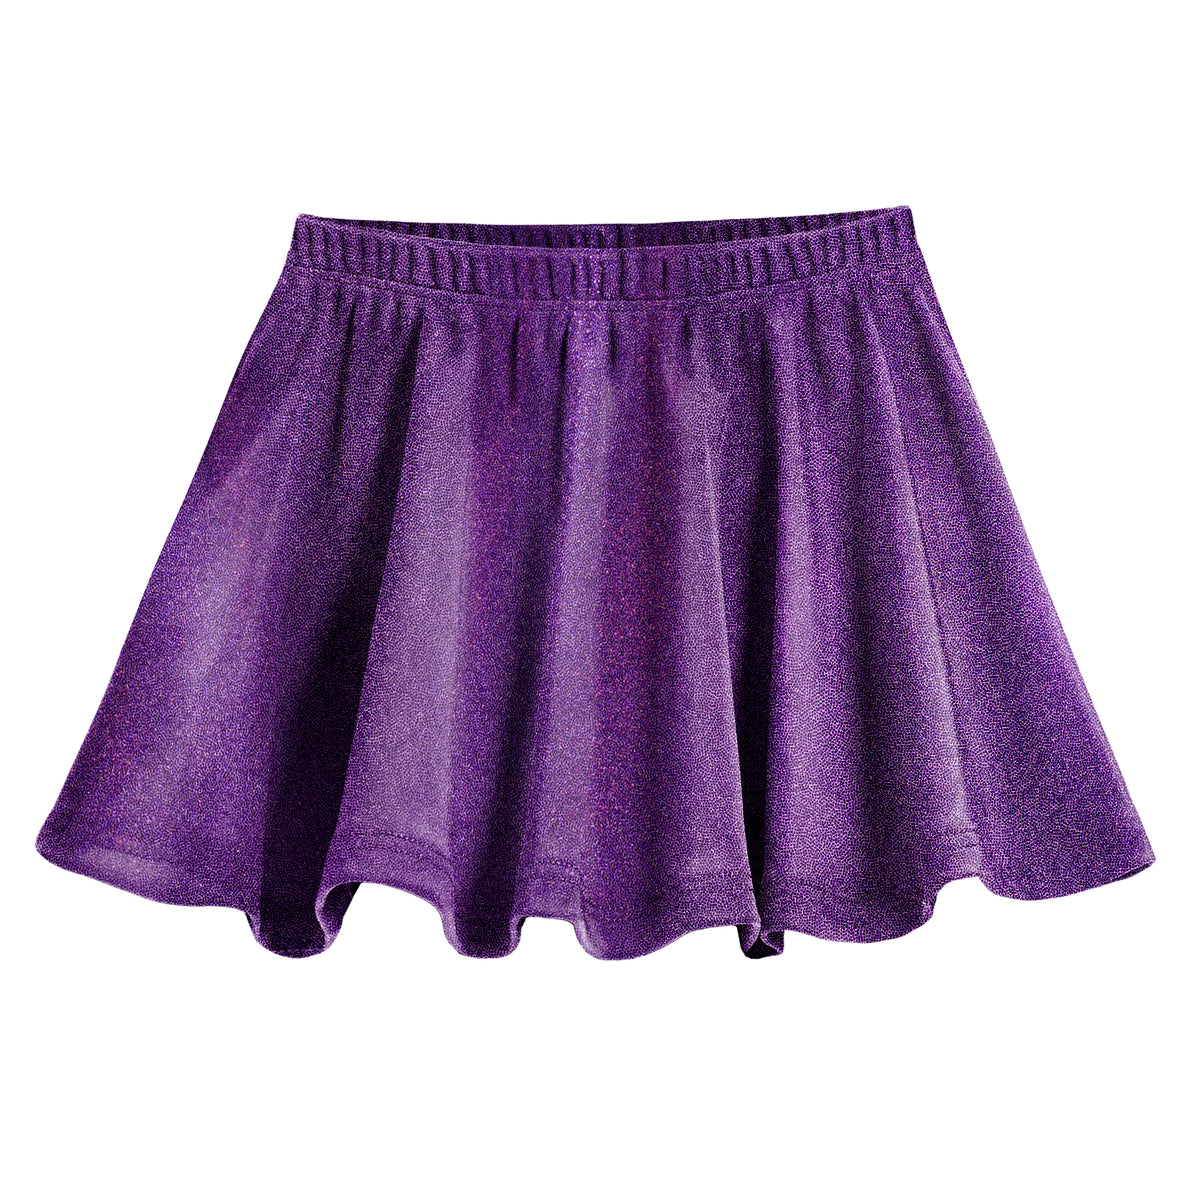 Girls Novelty Circle Skirt | Purple Sparkly Shimmer